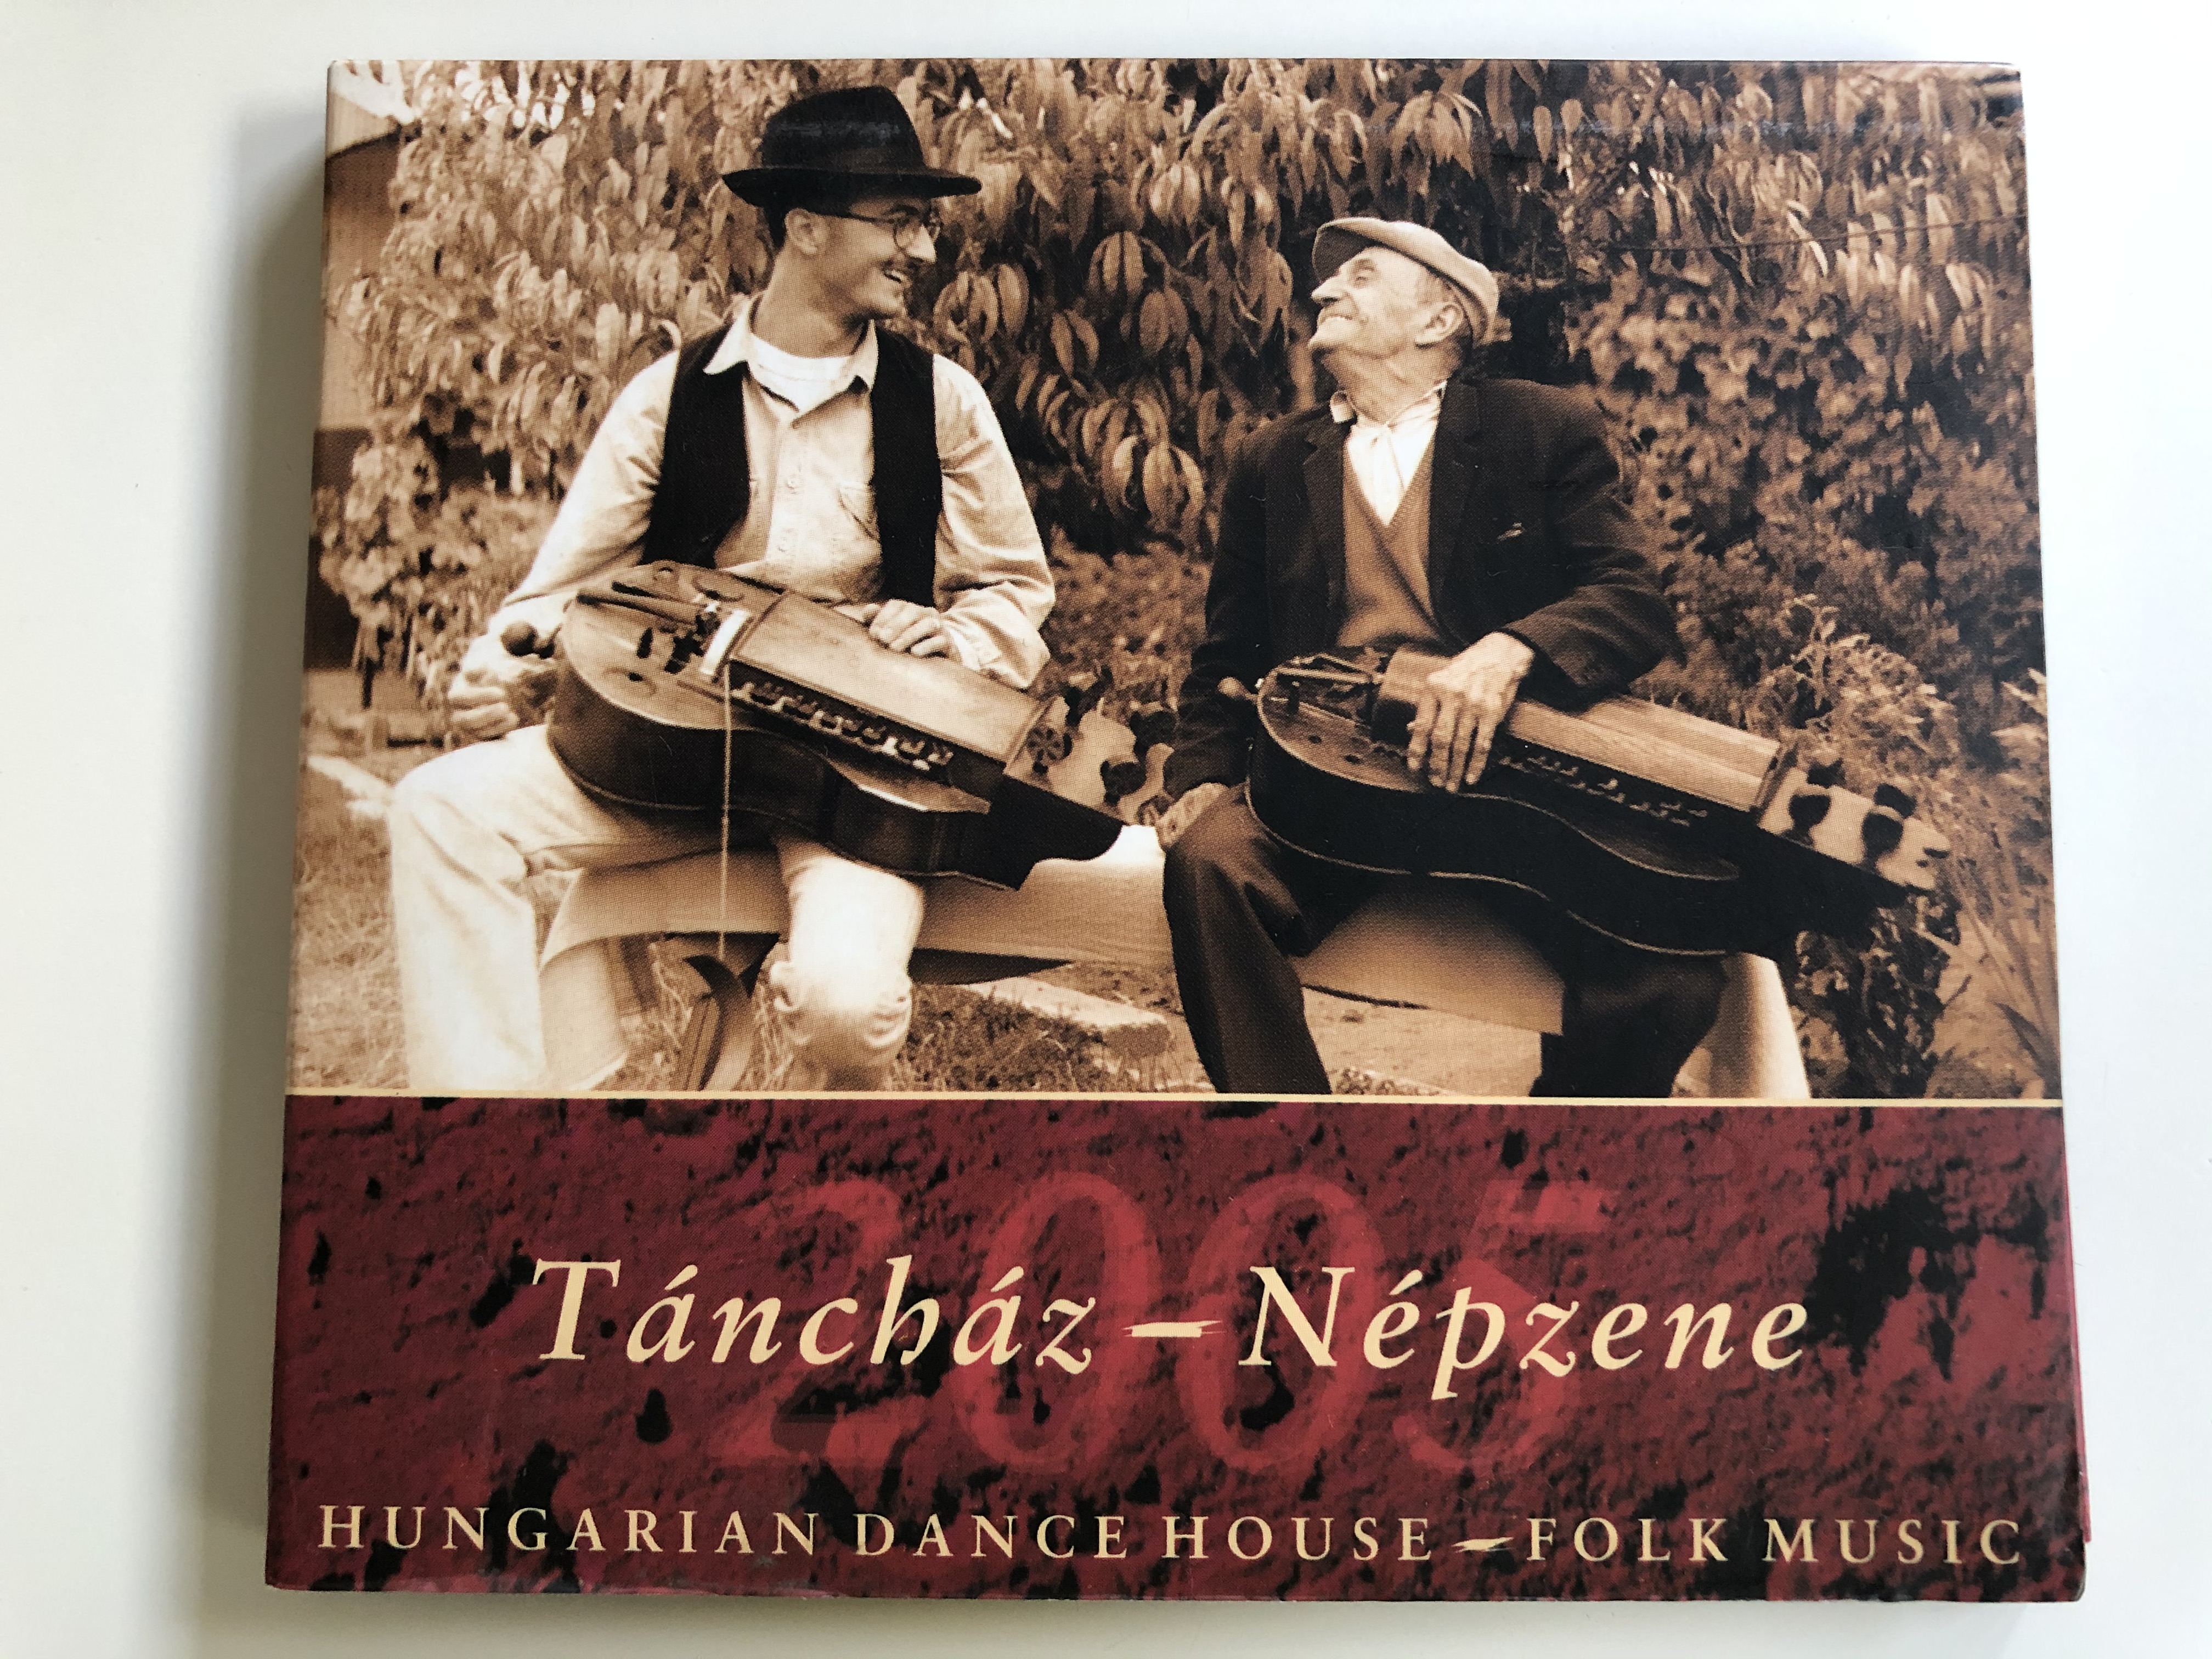 t-nch-z-n-pzene-2005-hungarian-dance-house-folk-music-hagyom-nyok-h-za-audio-cd-2005-hhcd0104-1-.jpg